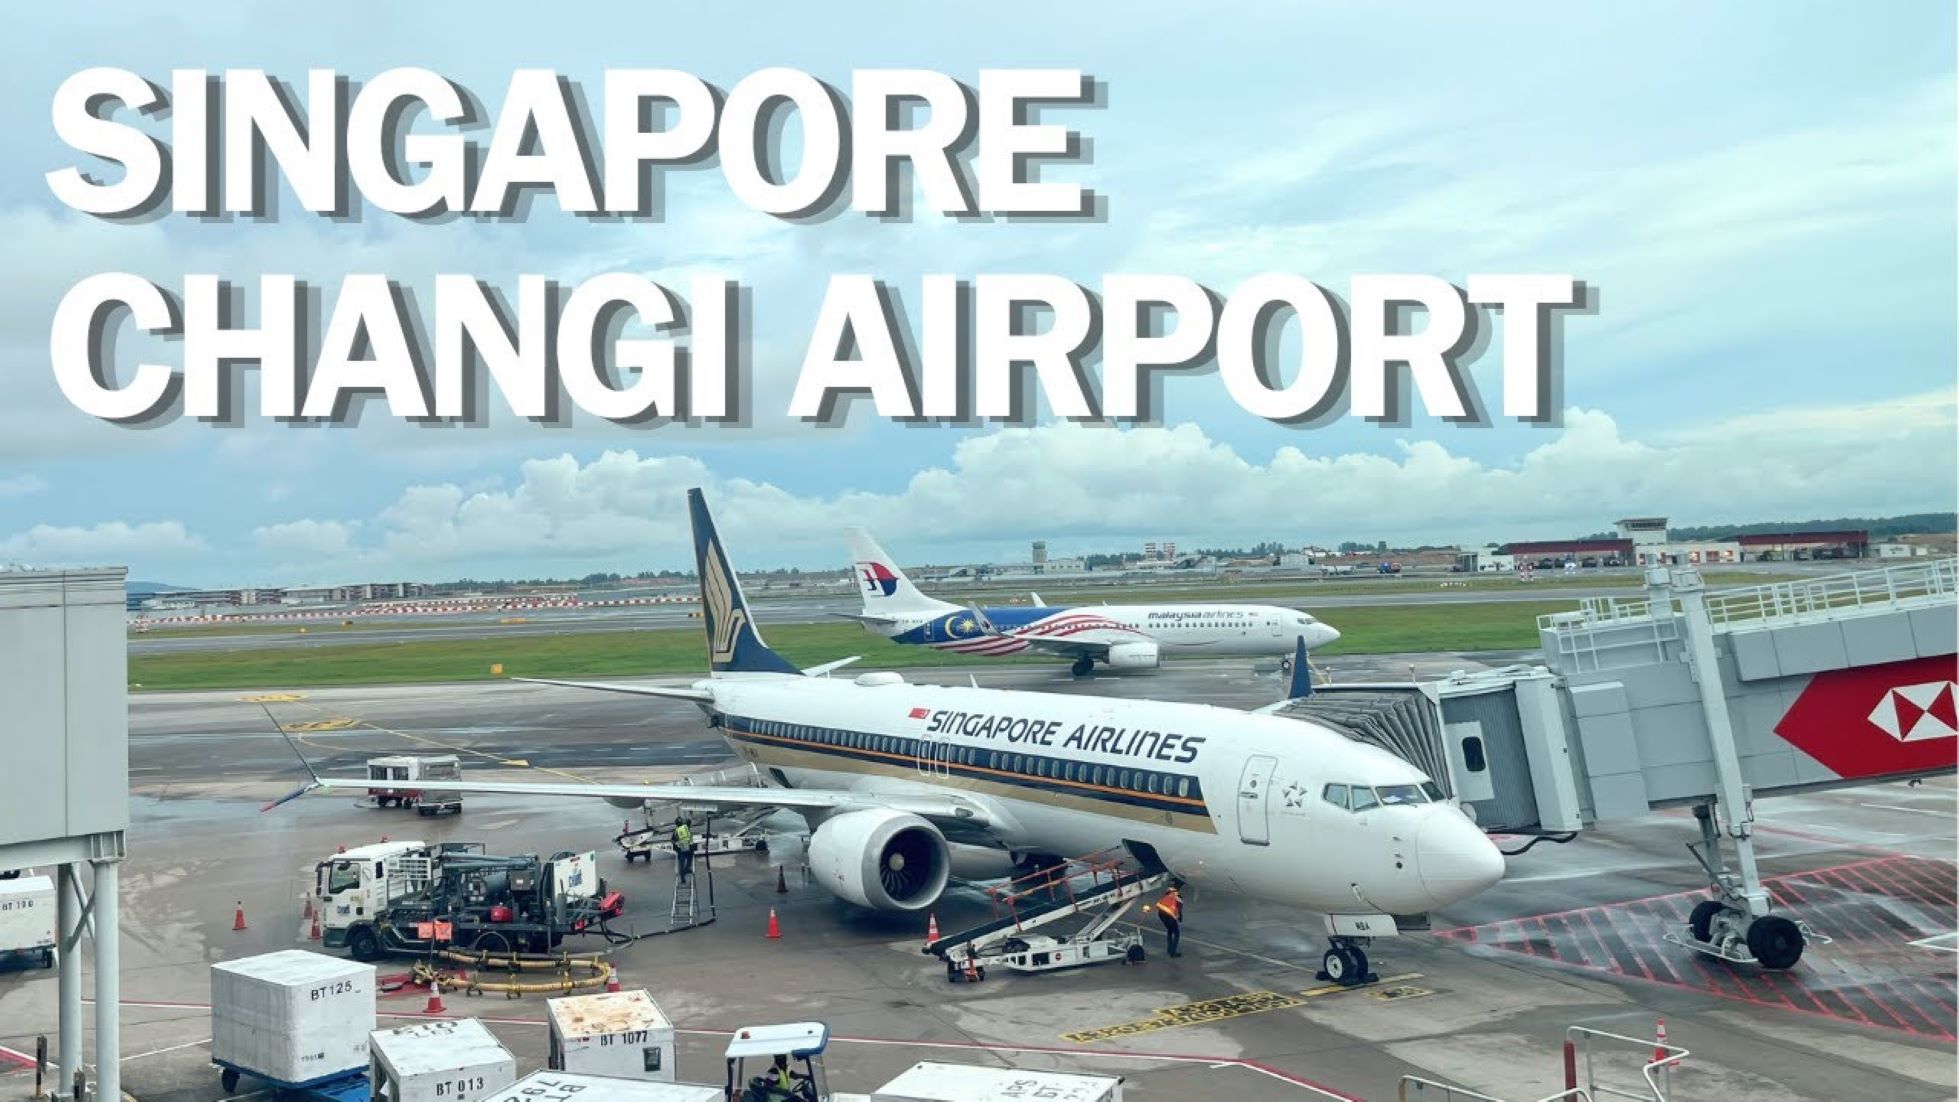 Singapore Changi Airport Recorded 16.5 Million Passengers In Q1